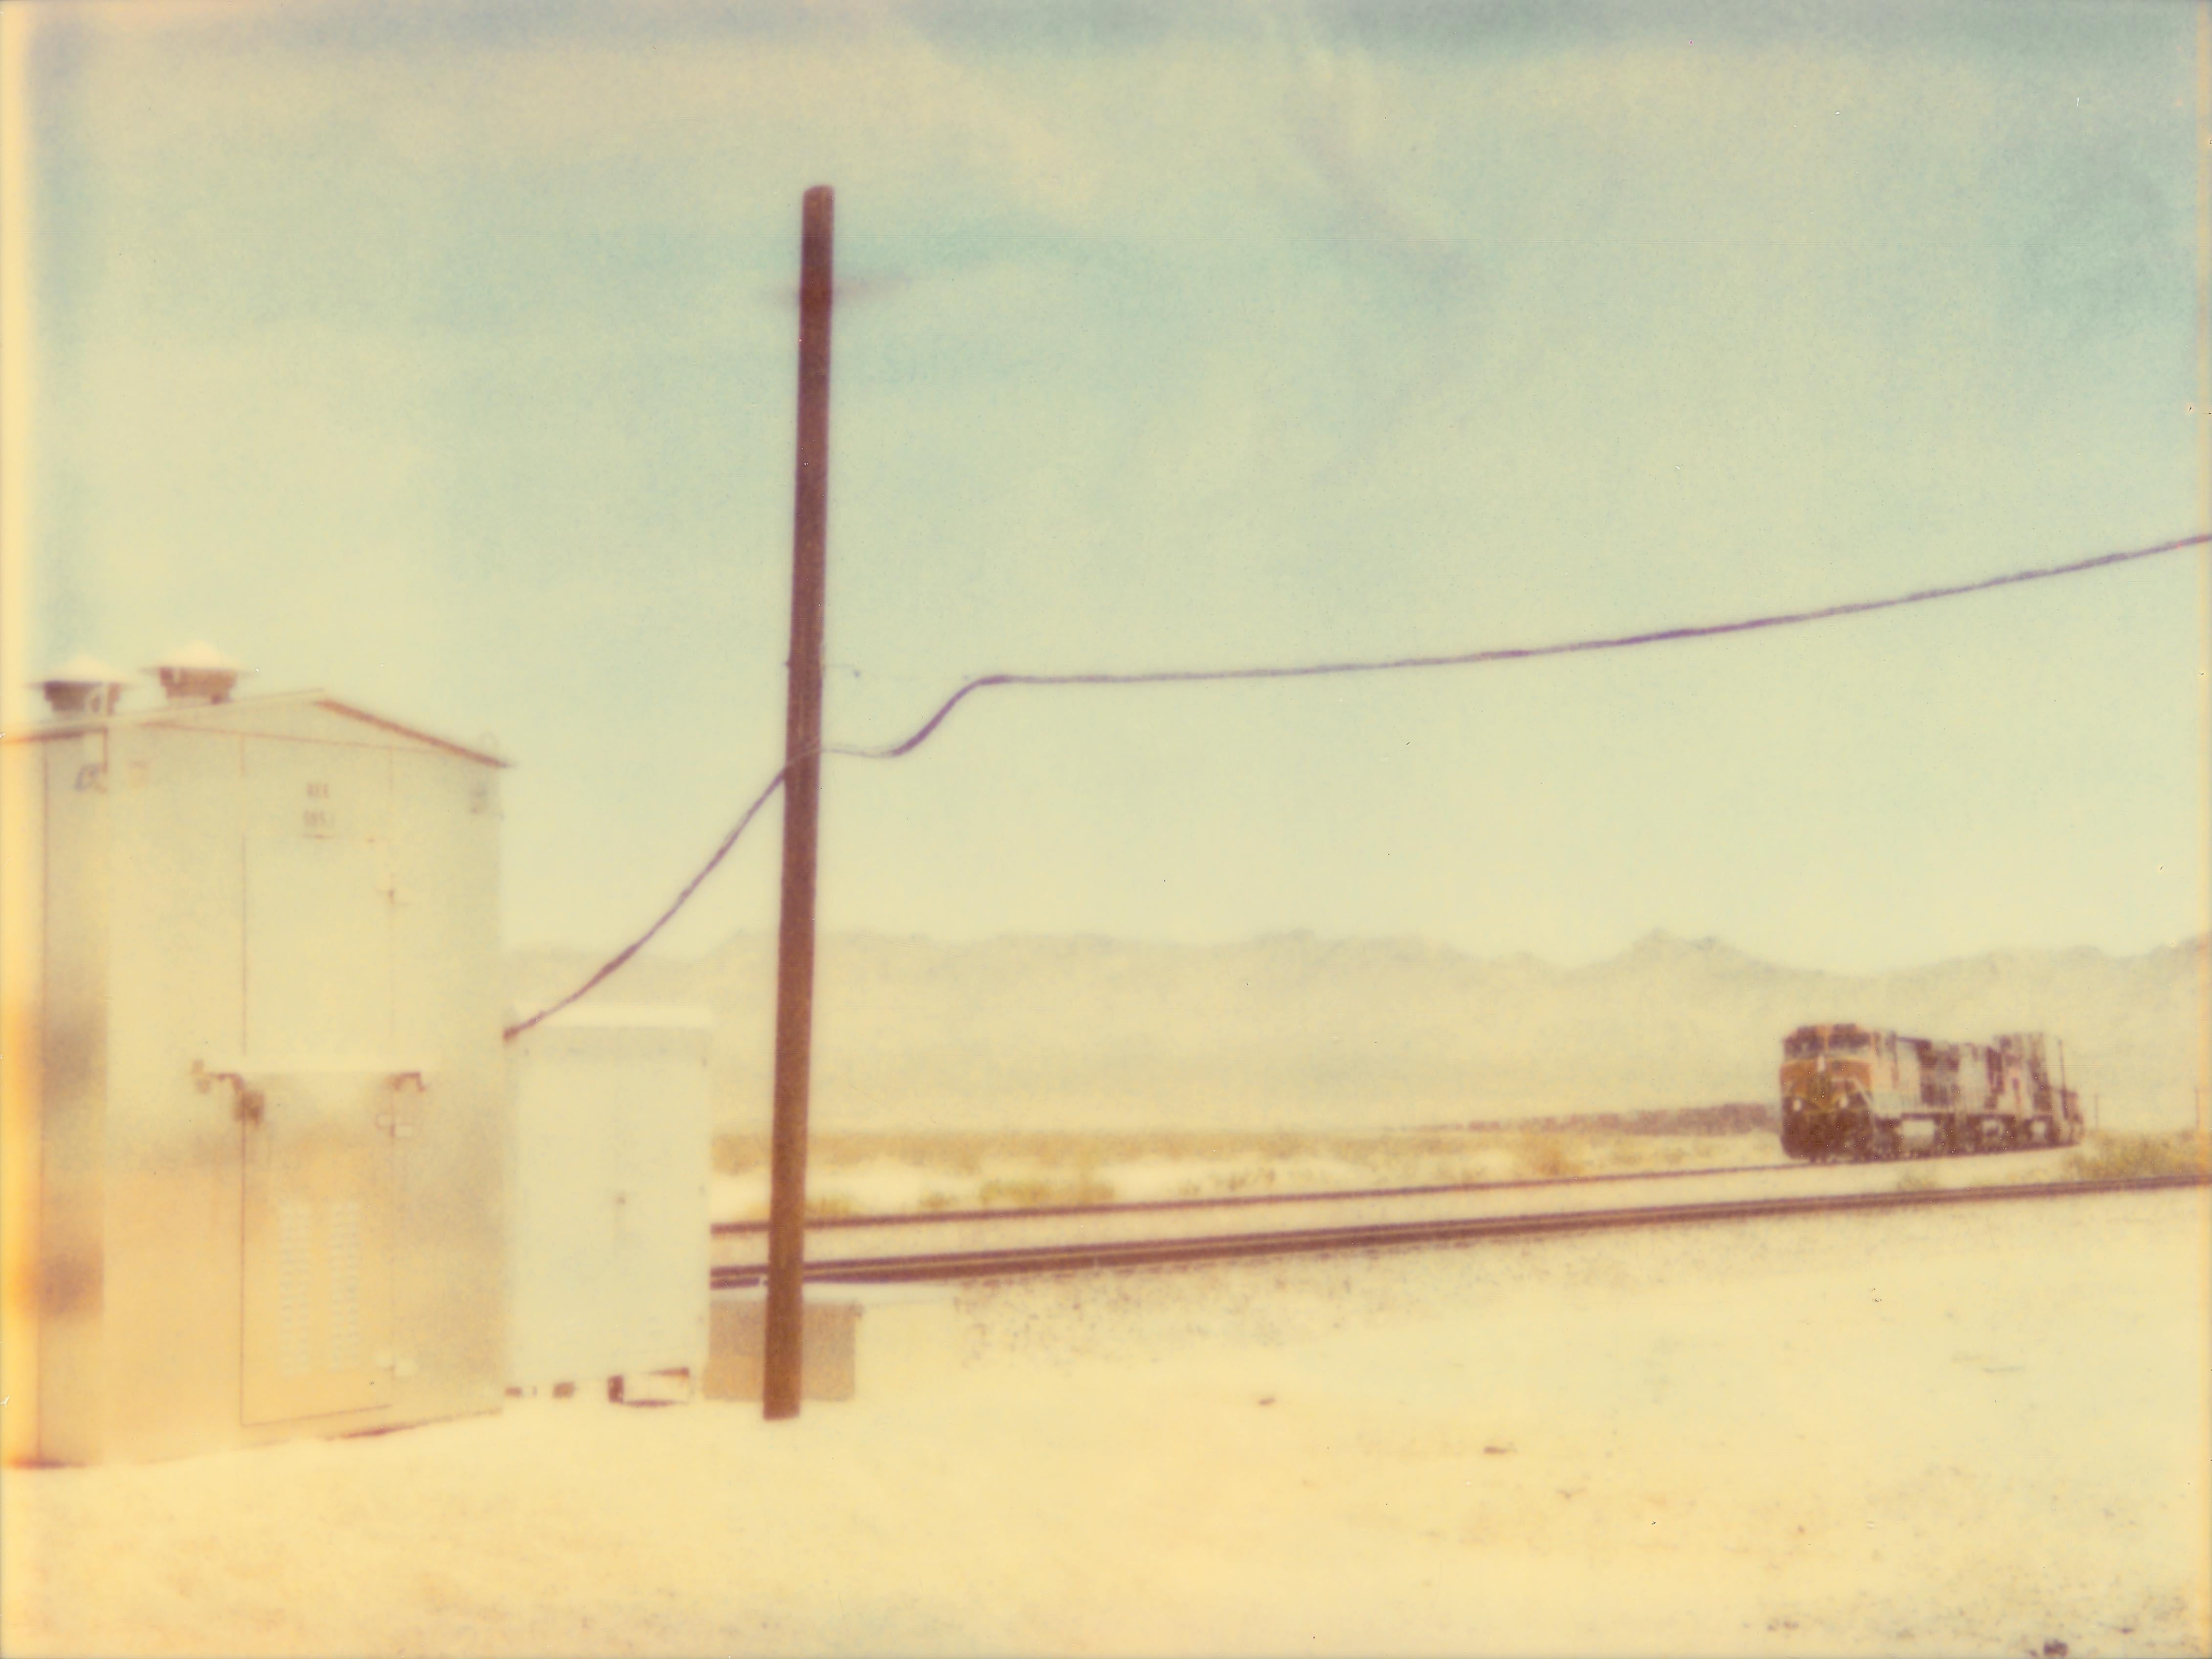 Stefanie Schneider Landscape Photograph - Approaching Train (Wastelands) - 43x59cm, analog, Polaroid, Contemporary, color